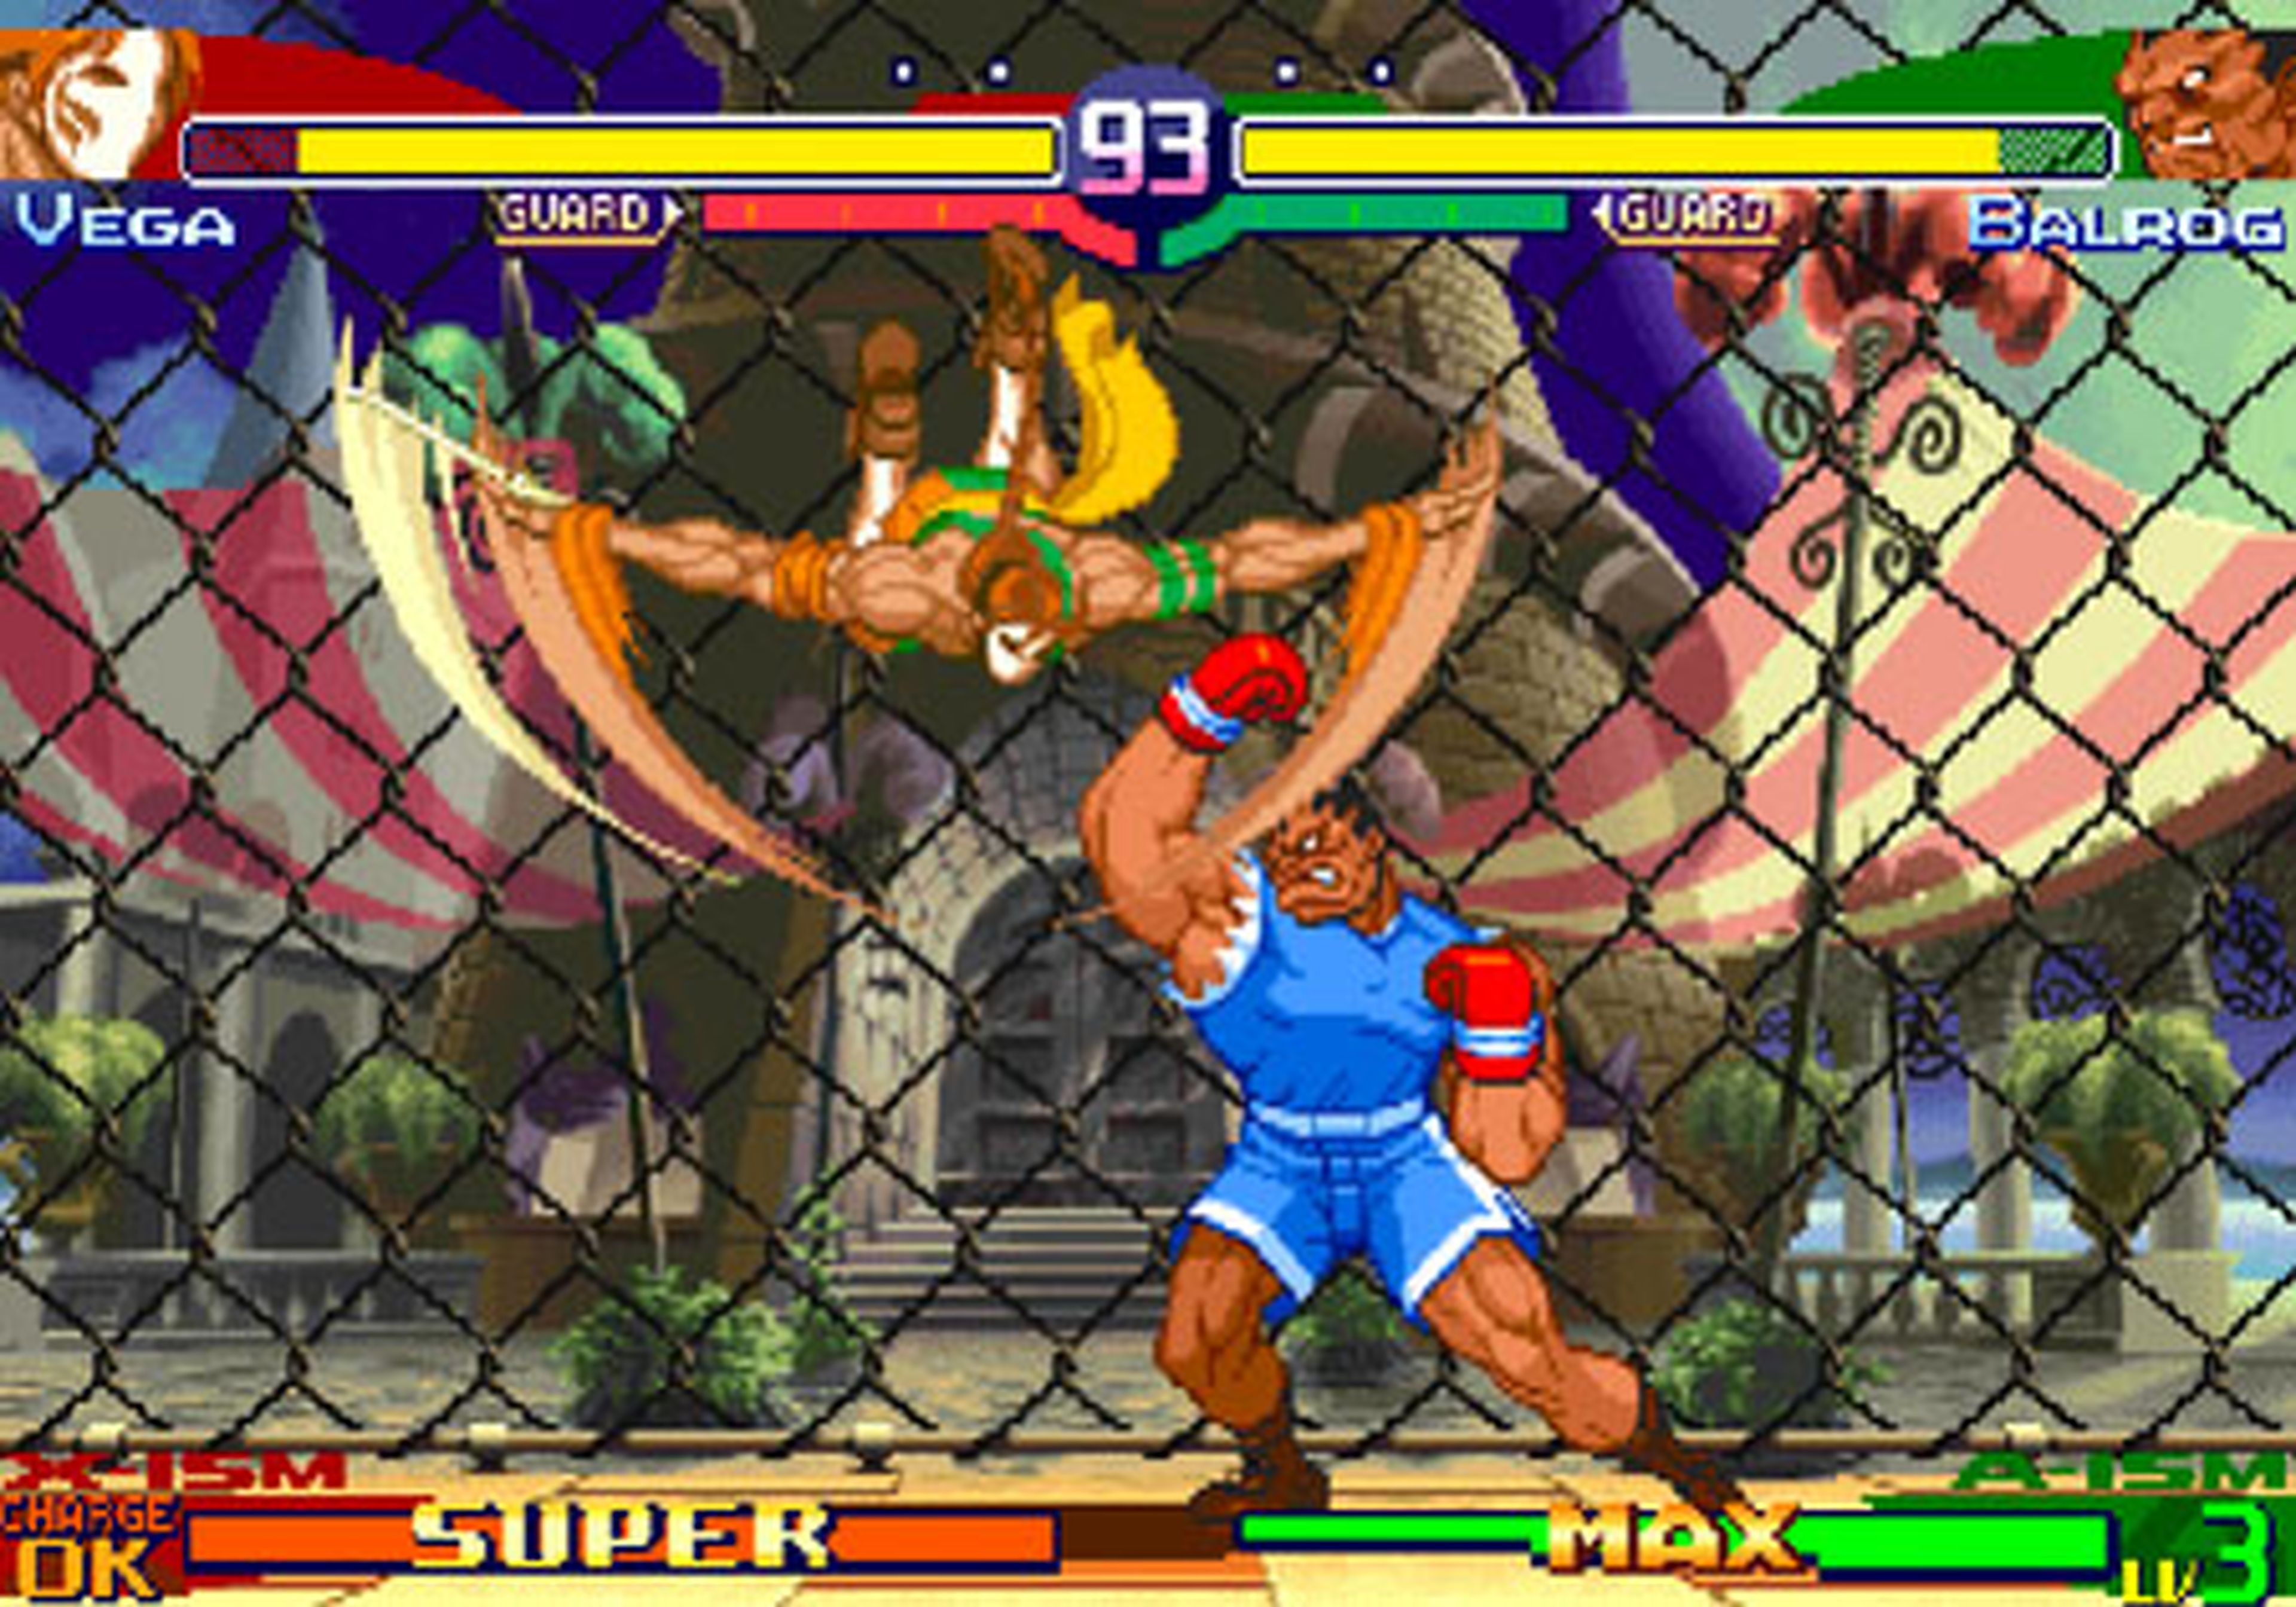 La semana de Street Fighter: Así es Vega